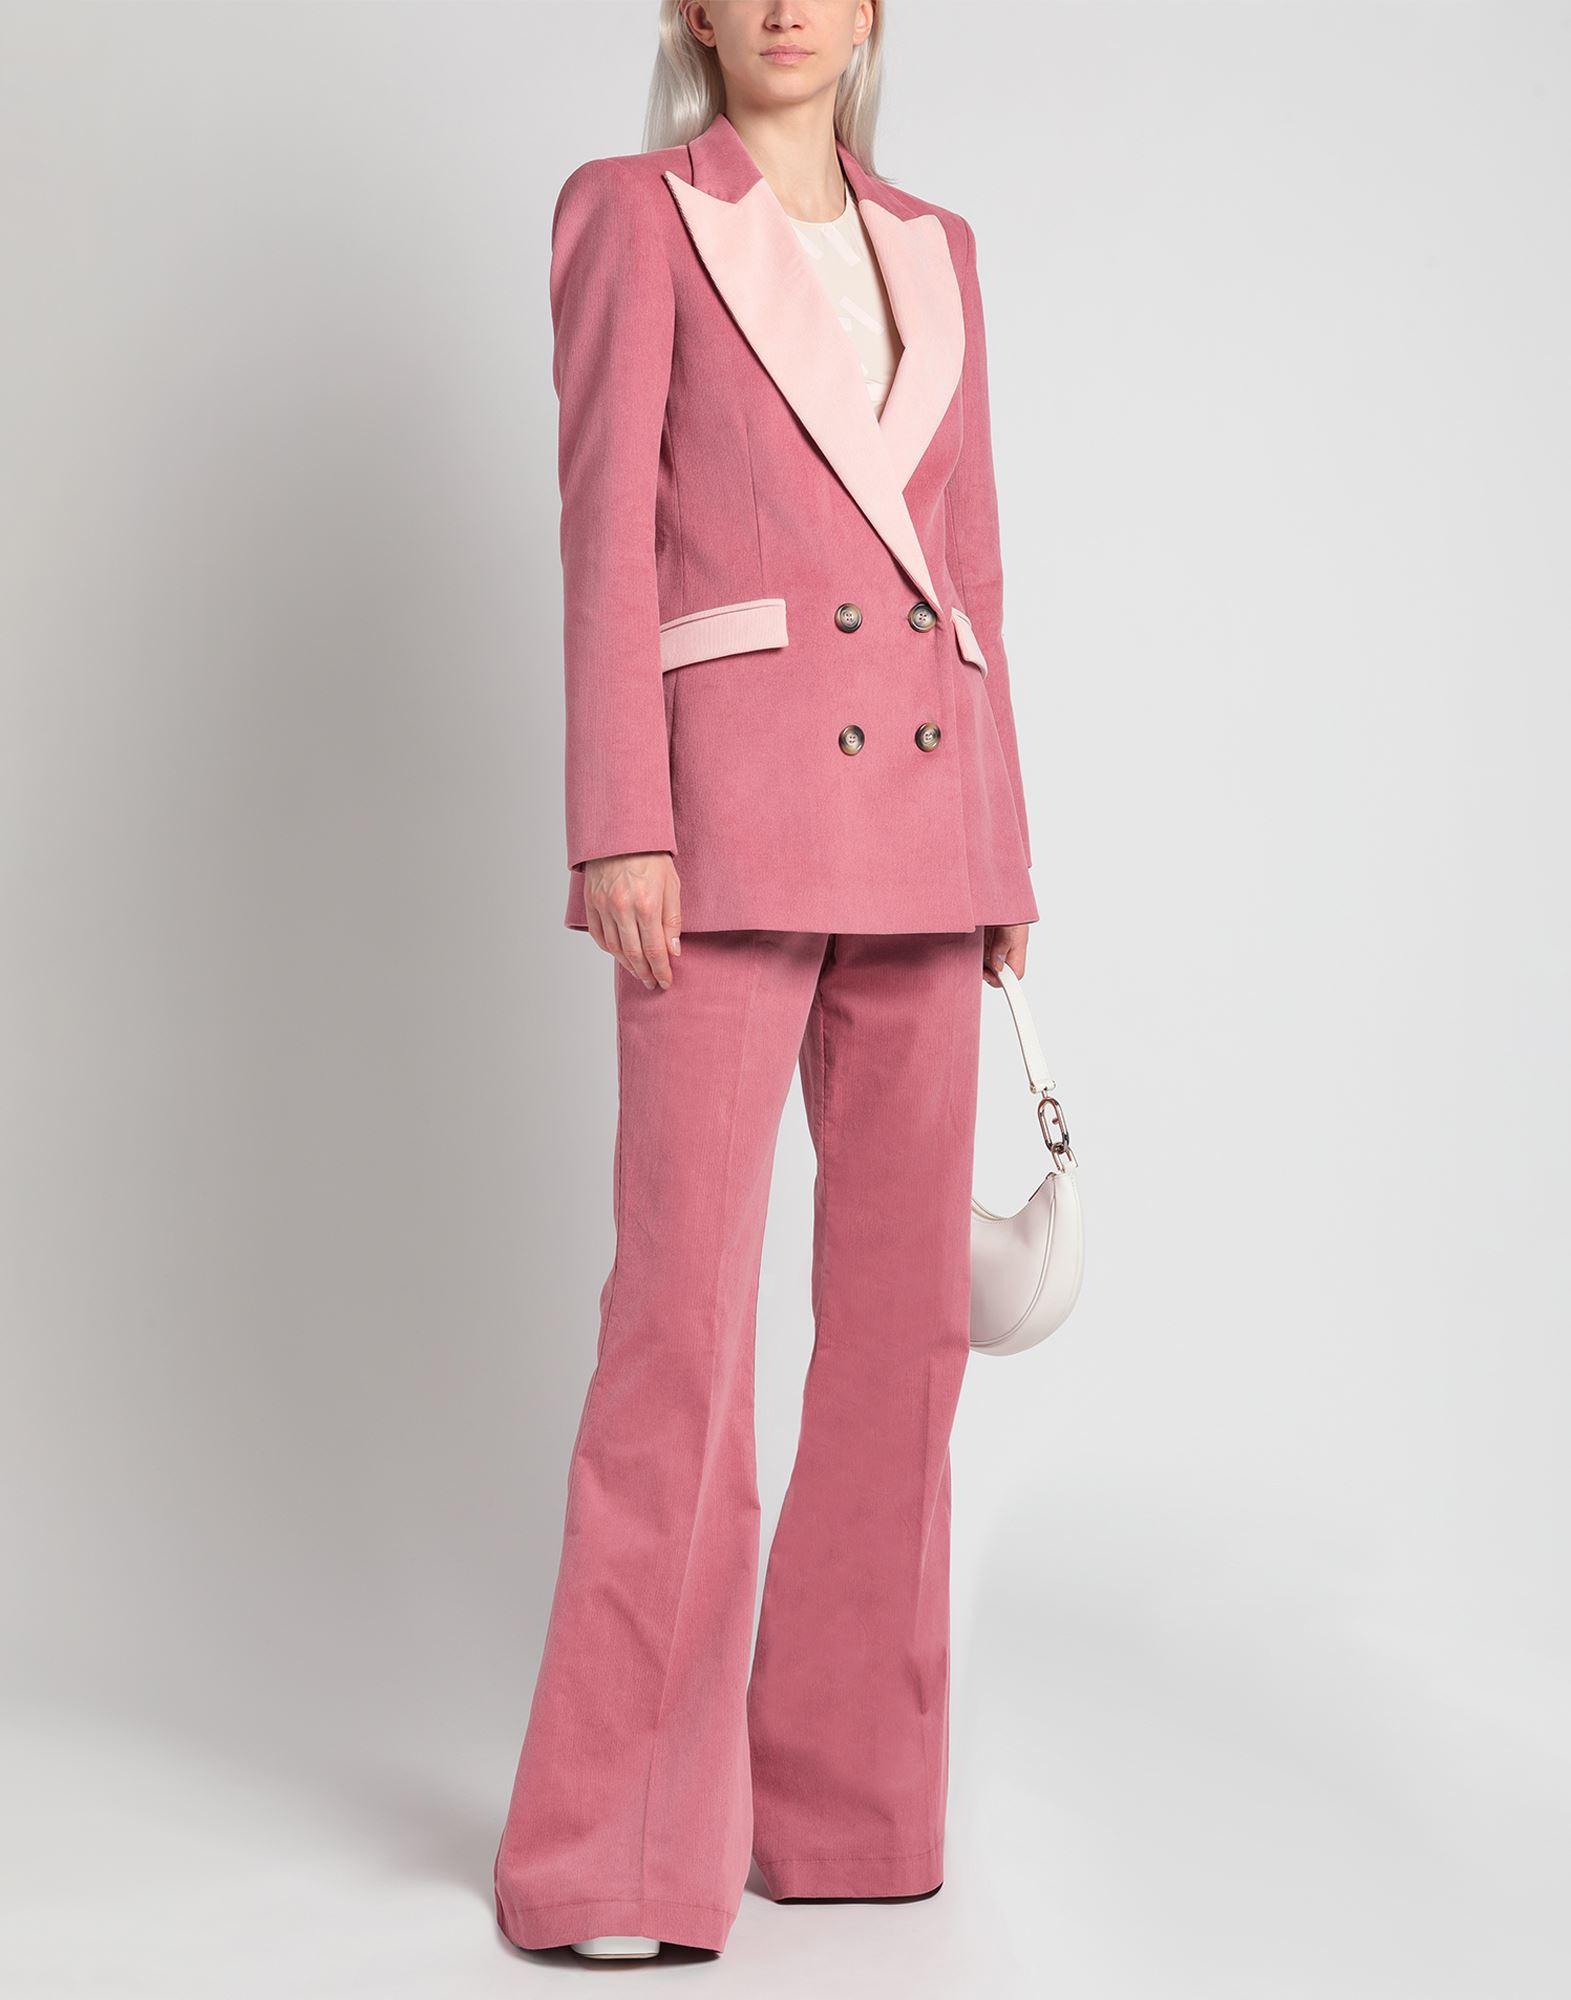 Hebe Studio Velvet Suit Jacket in Pastel Pink Womens Clothing Suits Pink 